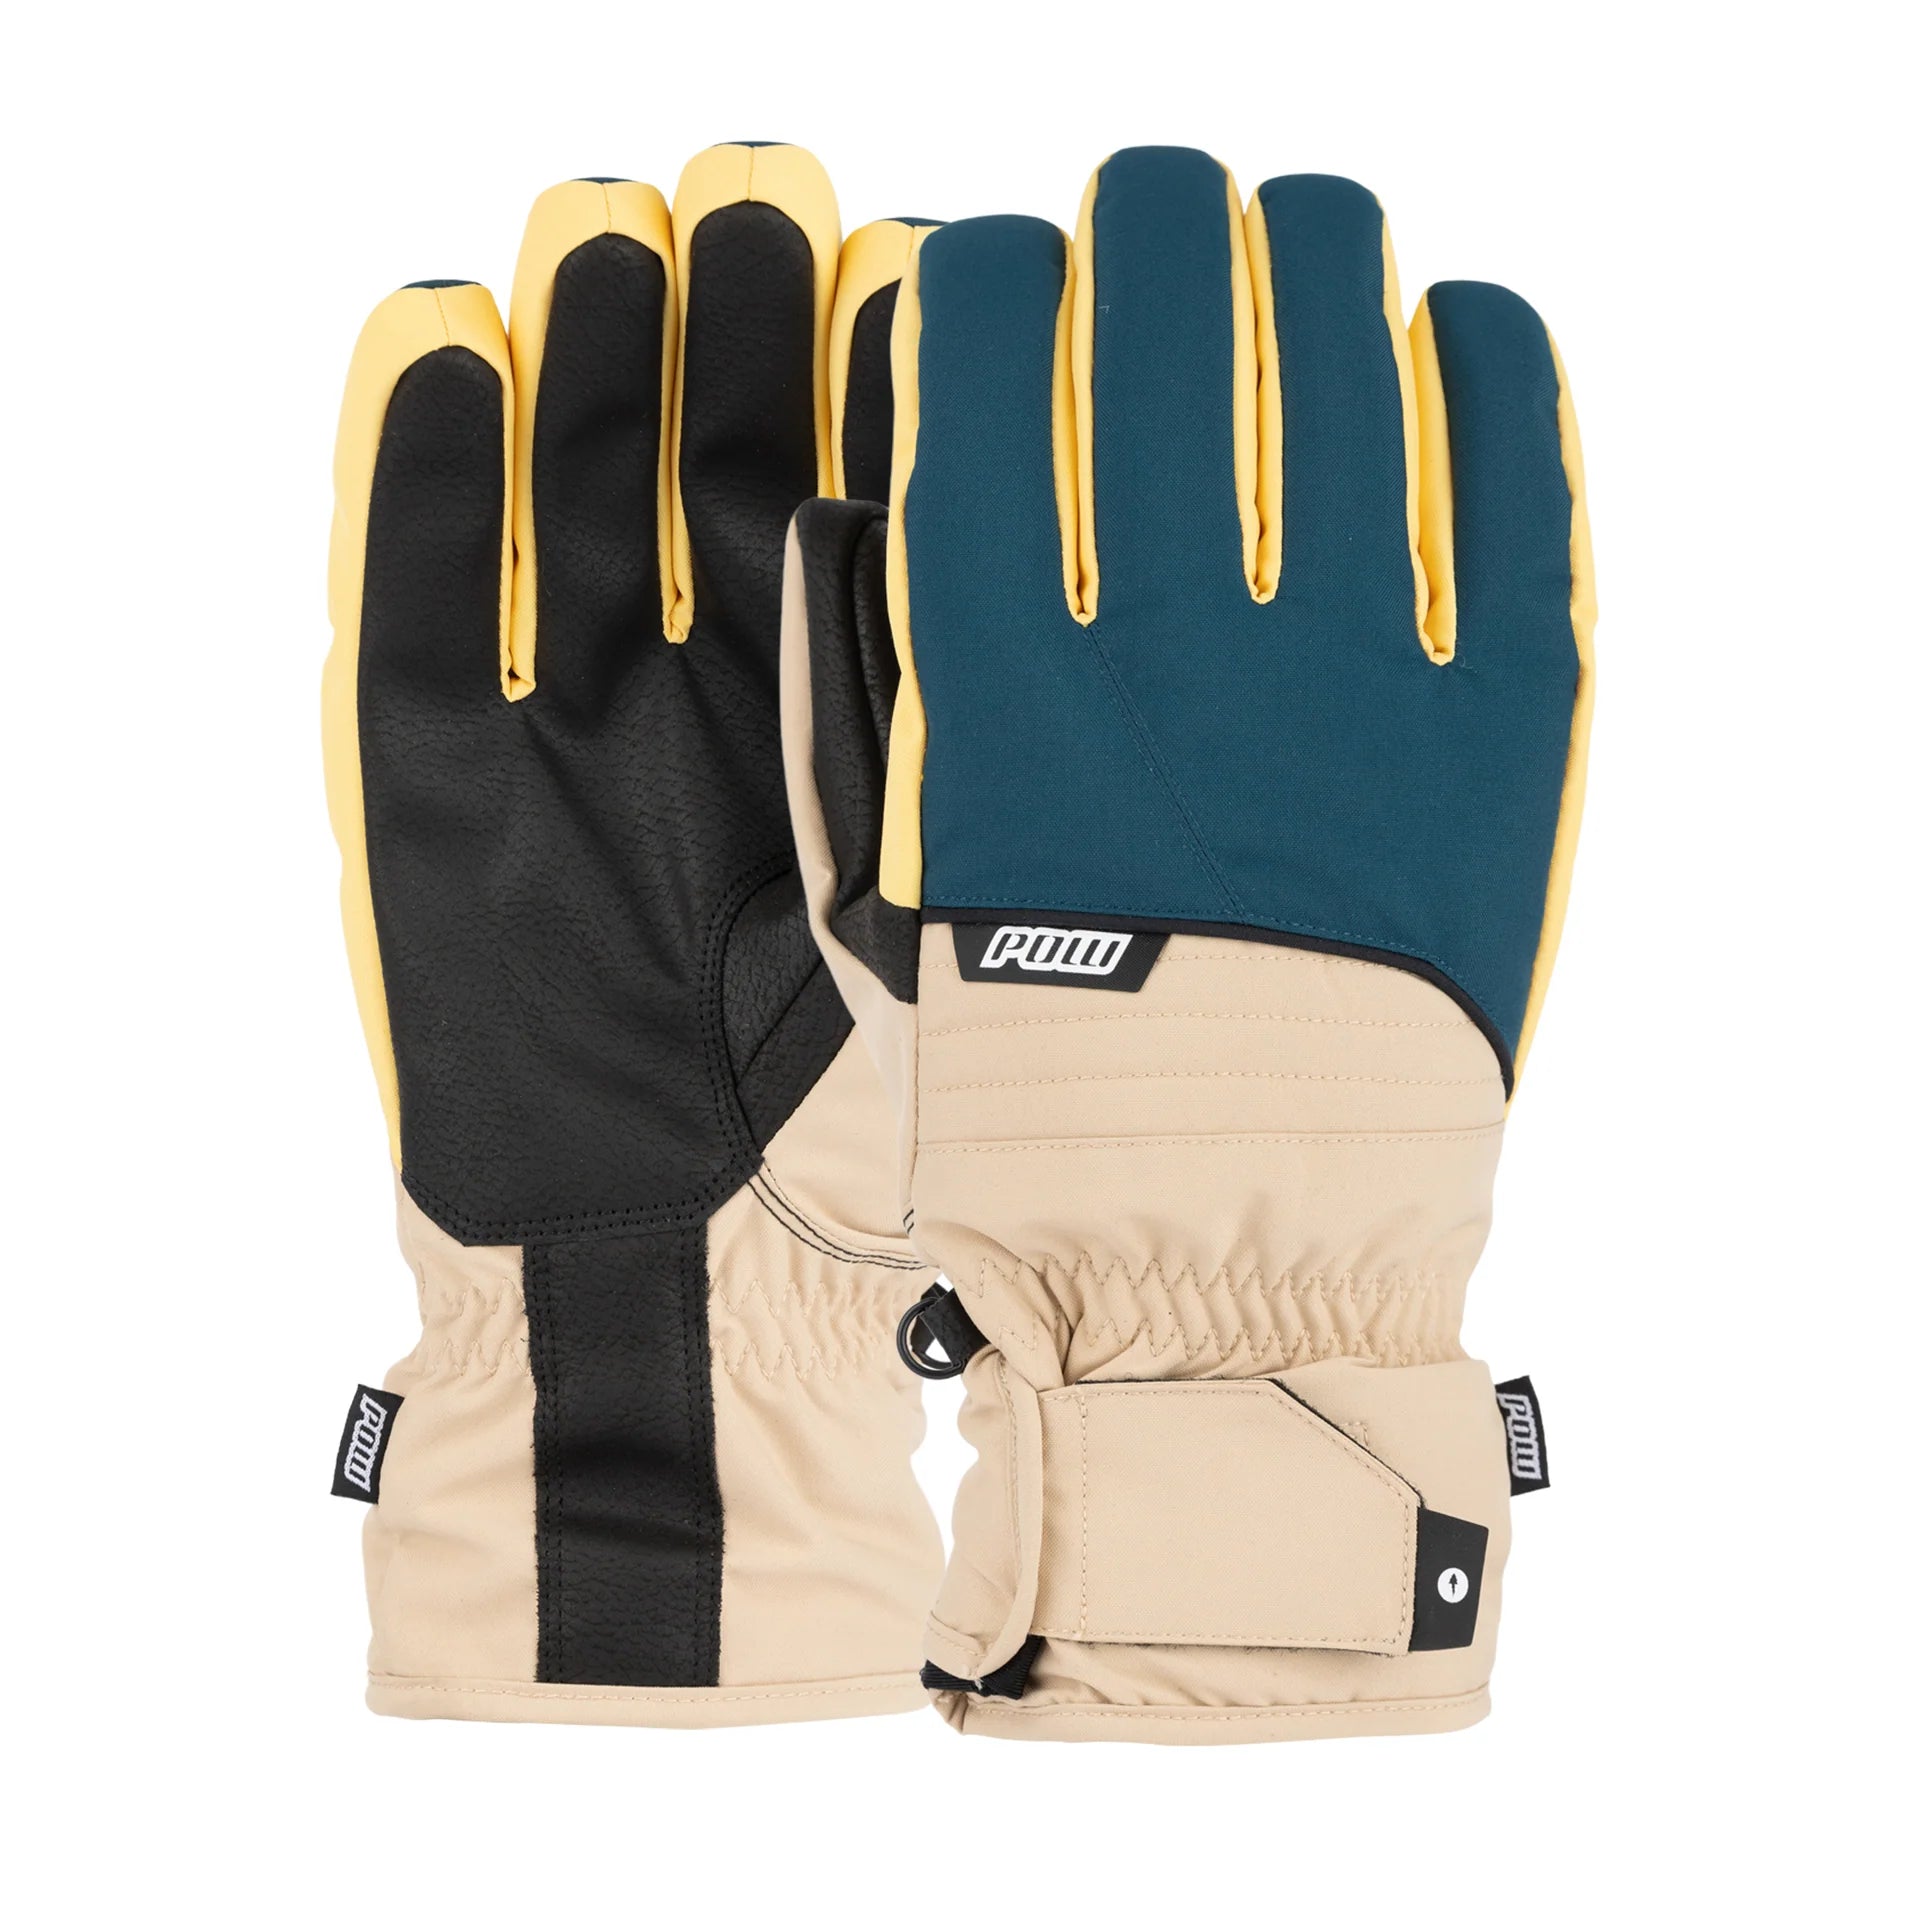 POW Zero Glove 2.0 Echo Blue, yellow and Black and tan